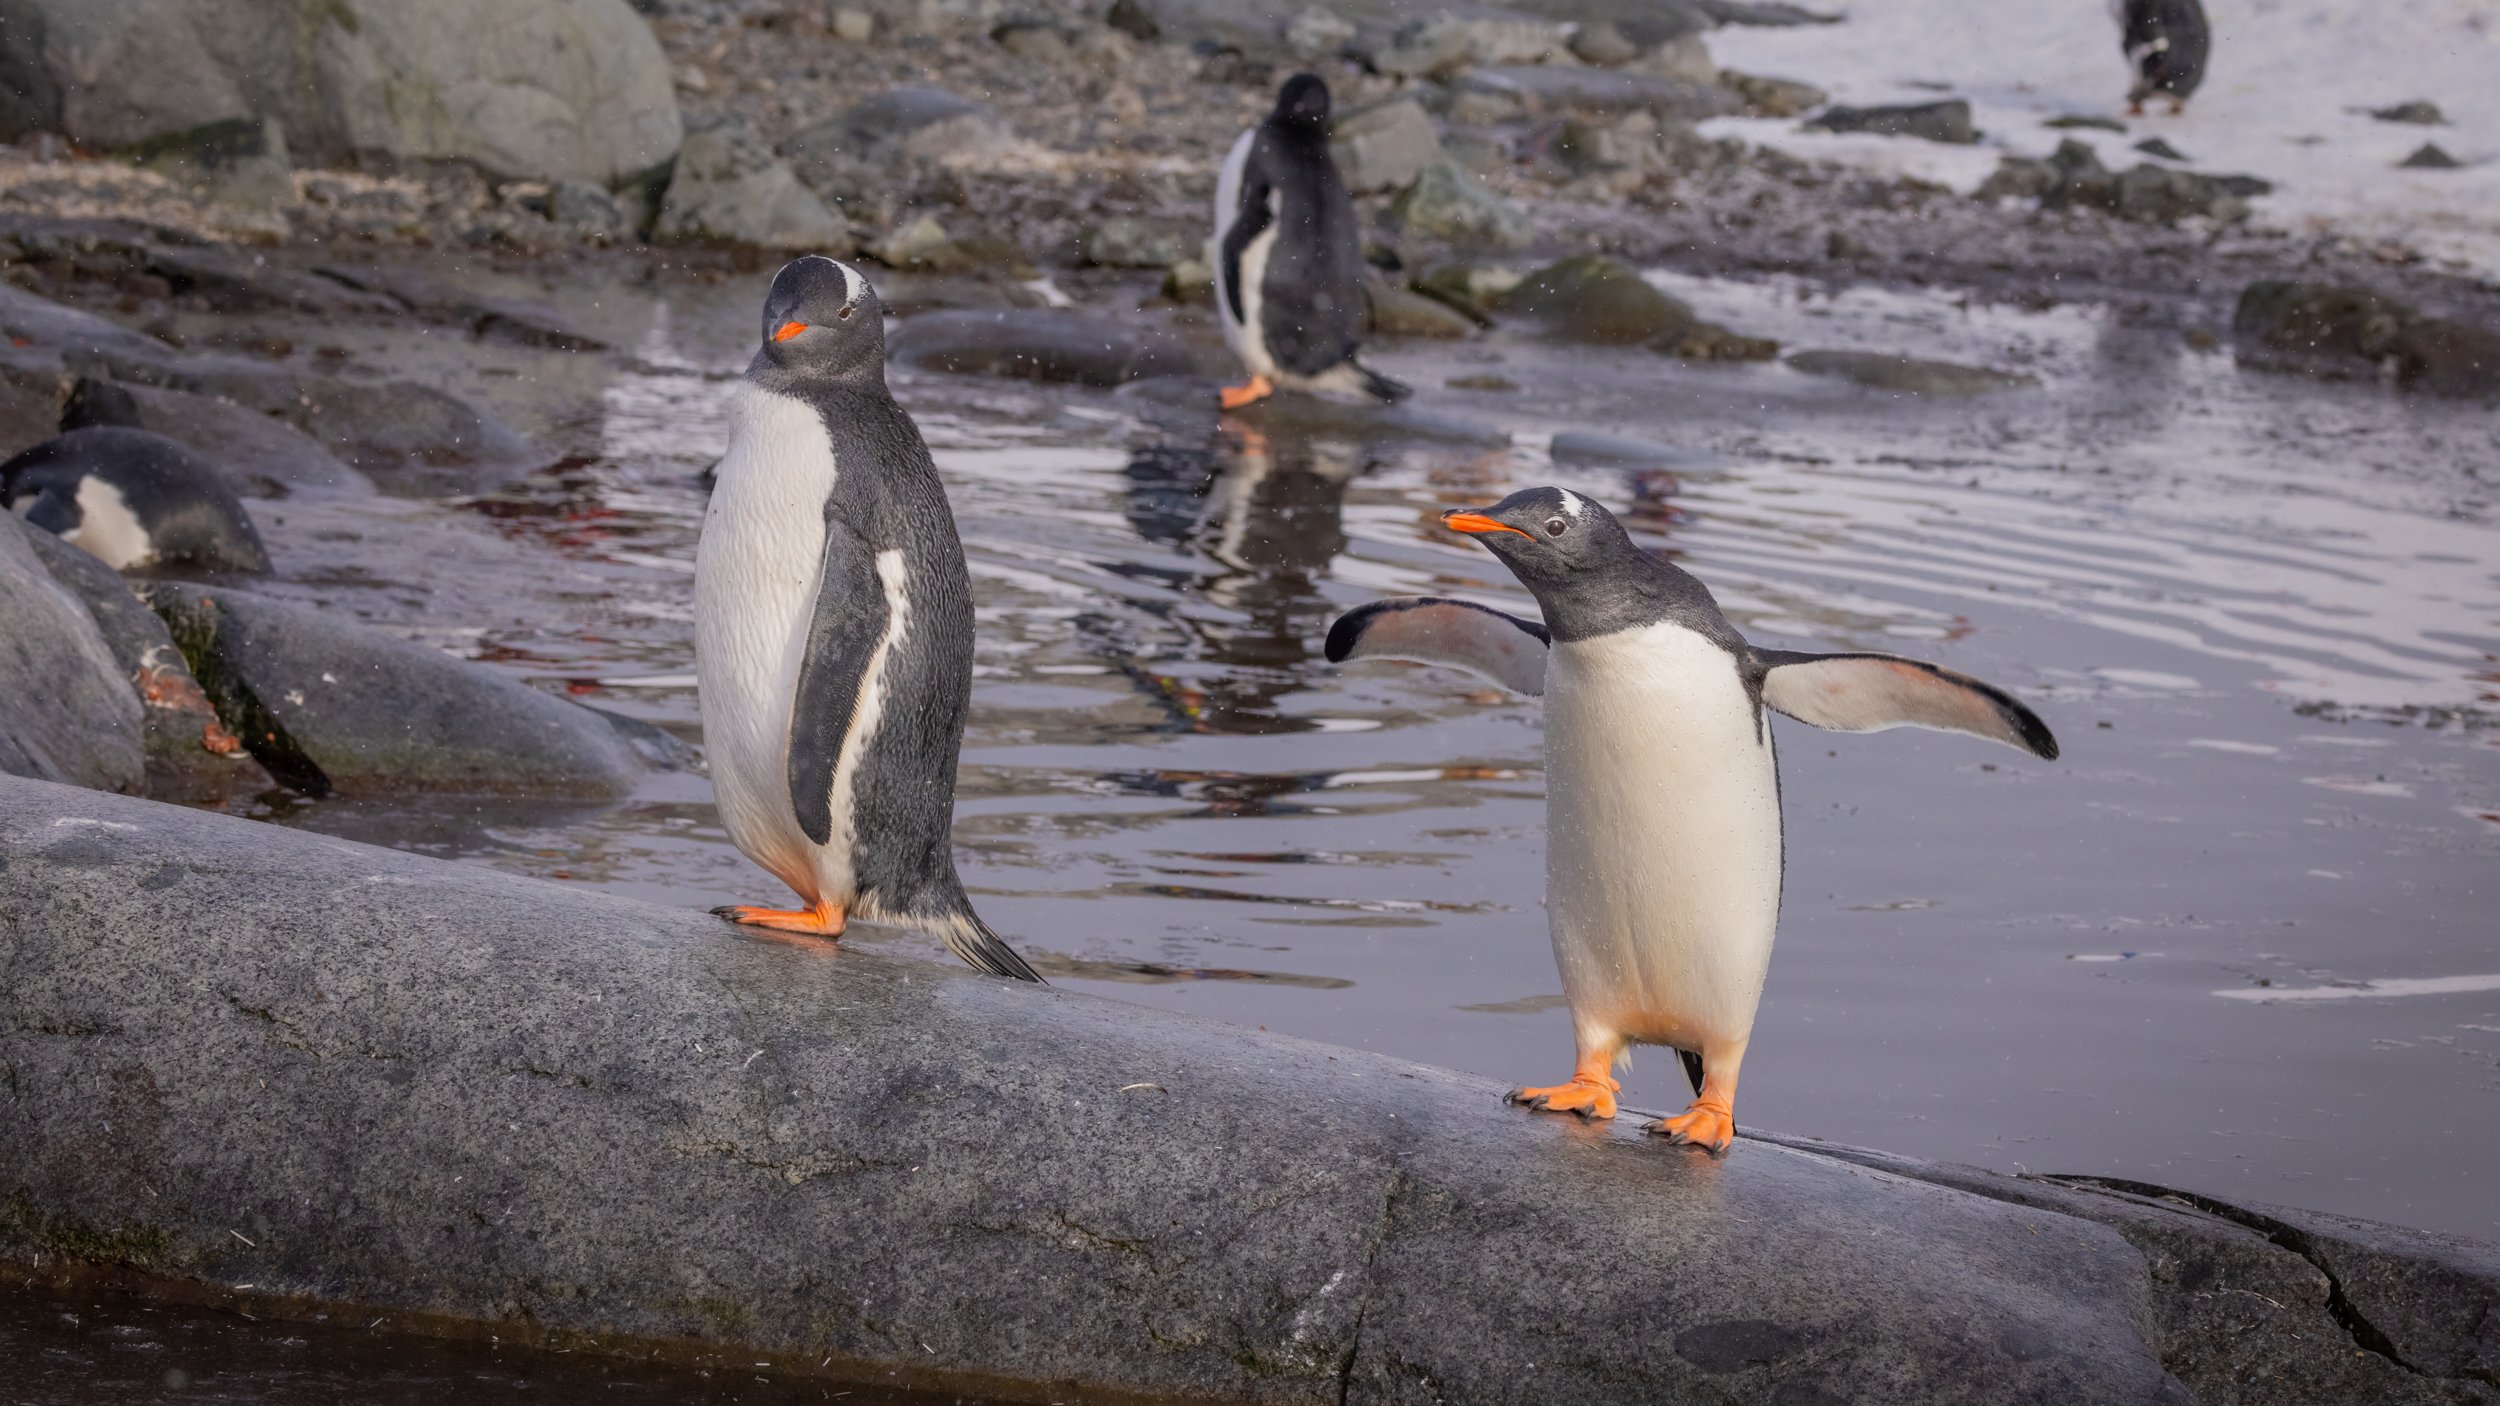 Antarctica_TravelingJules_Peterman Island Penguins_239A1976_2500px.jpg